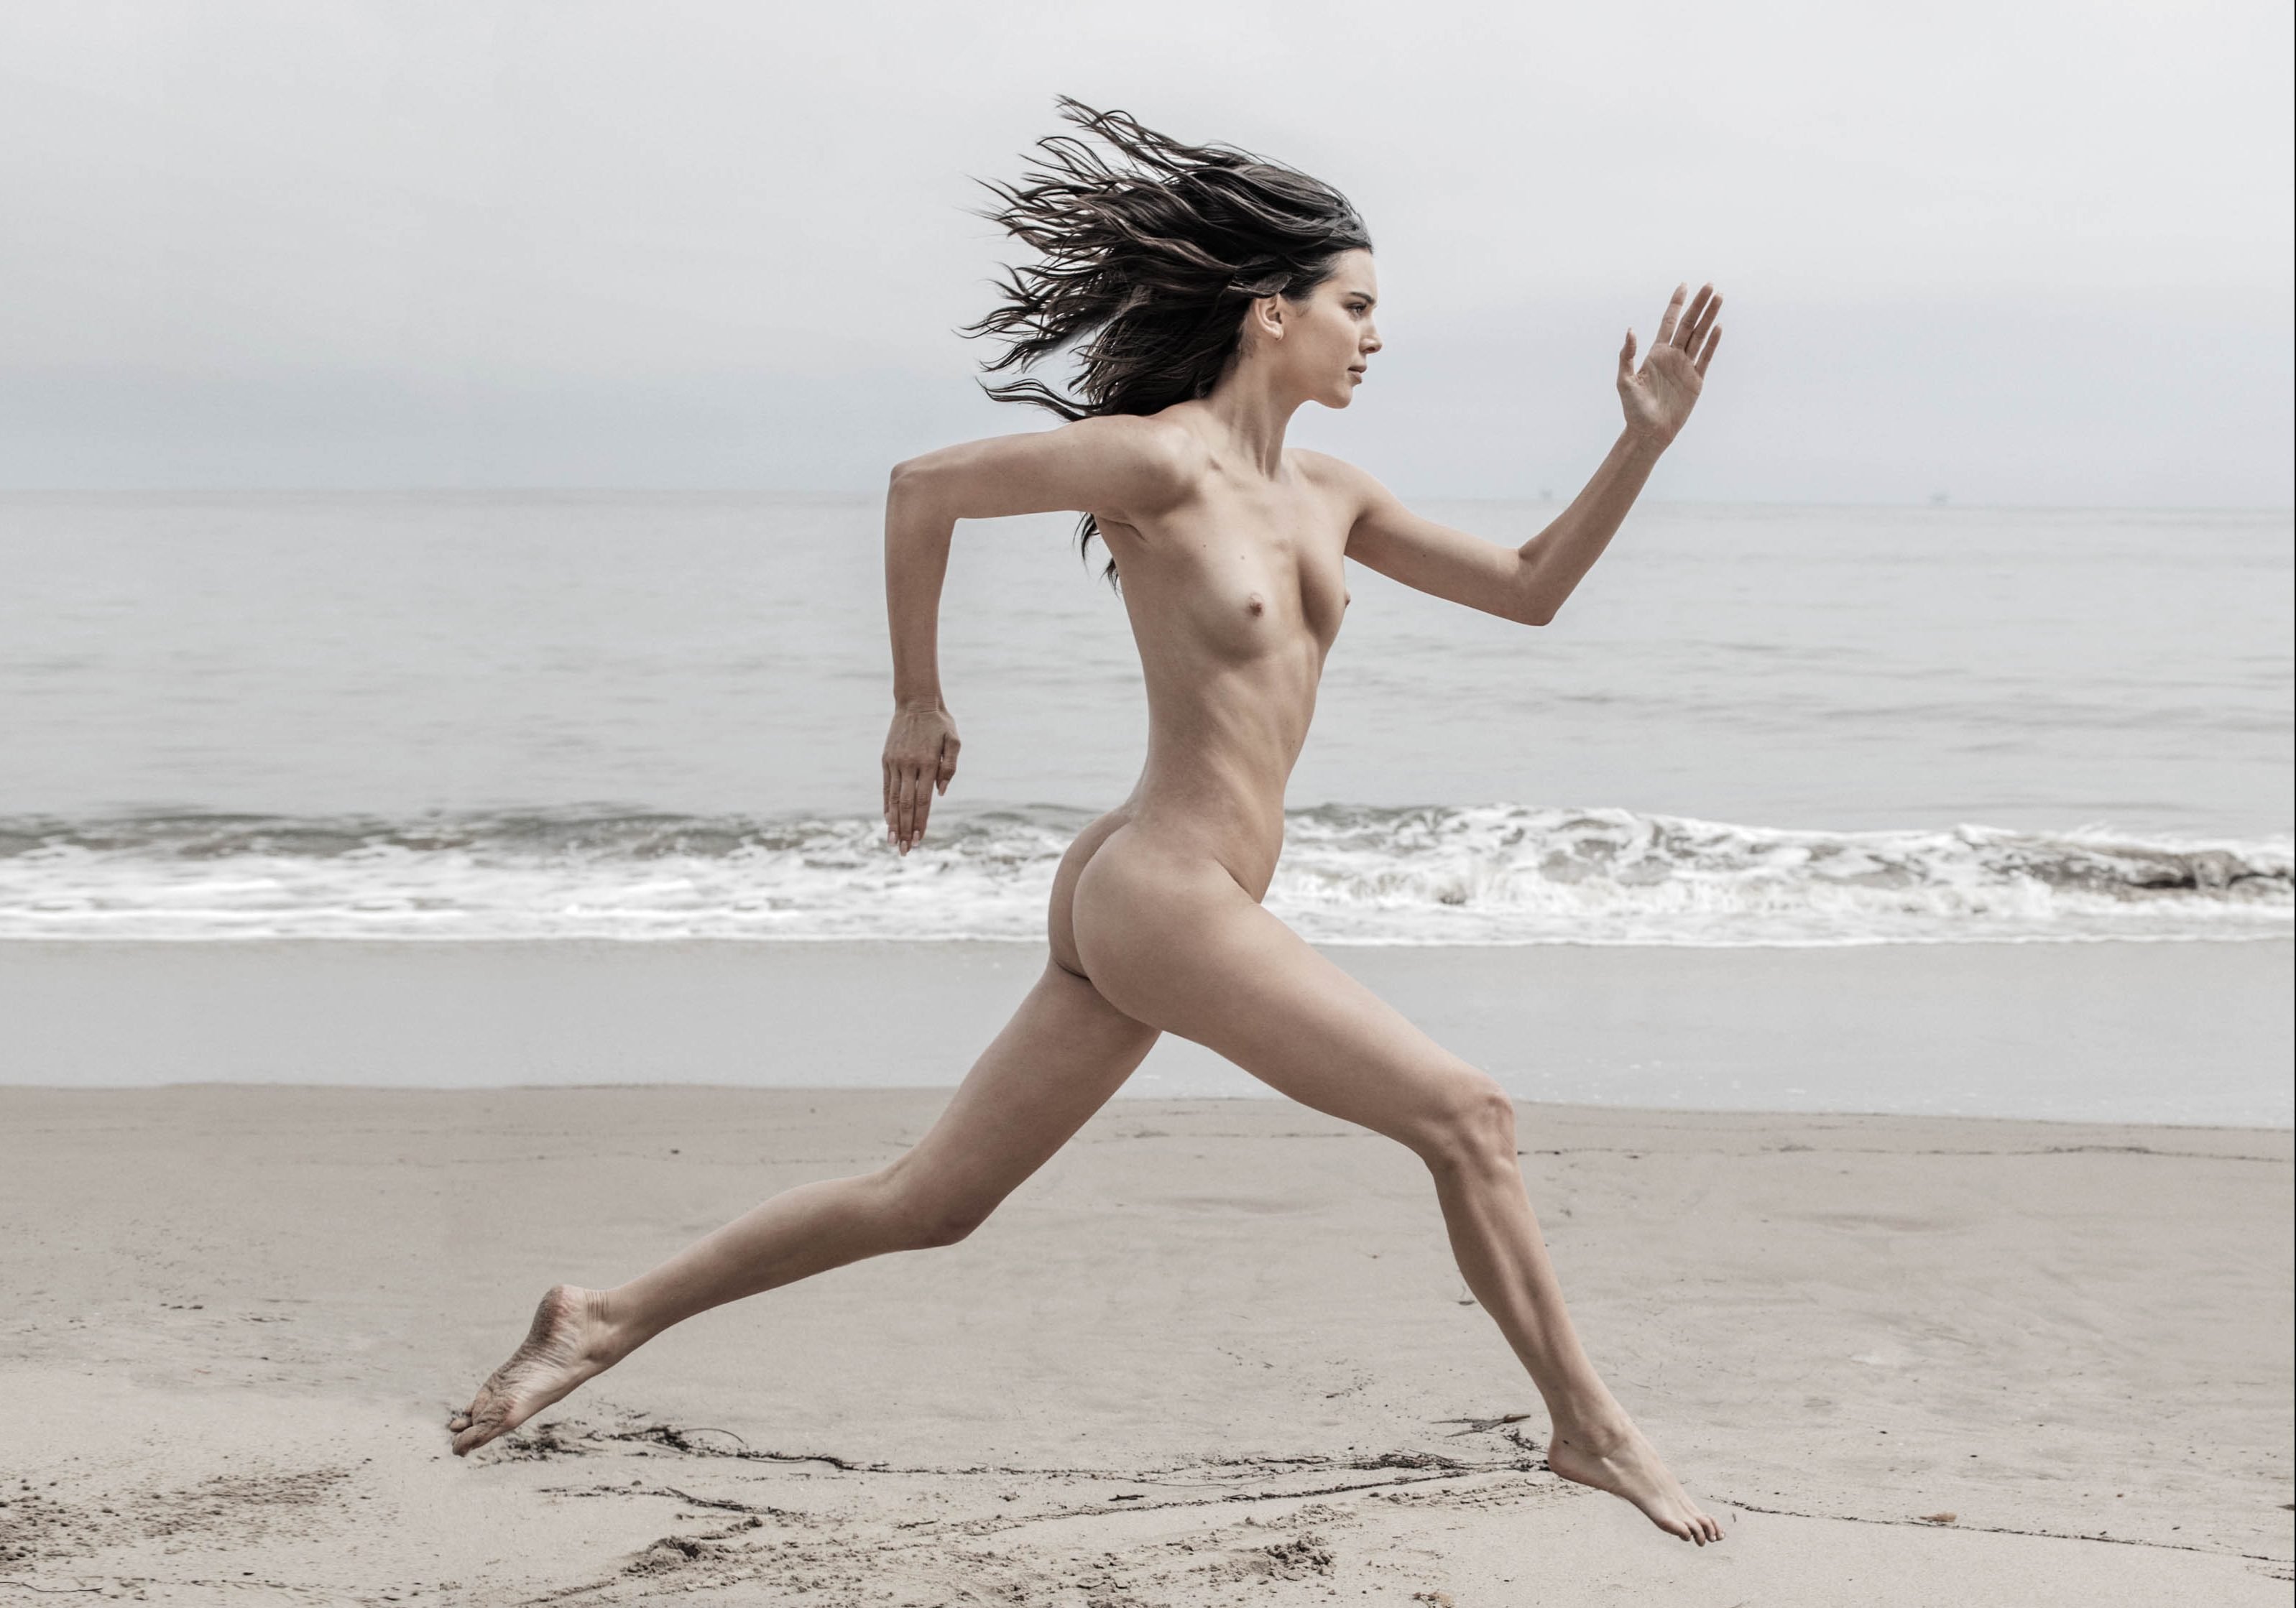 Бегущие голые красивые девушки (62 фото) - секс фото